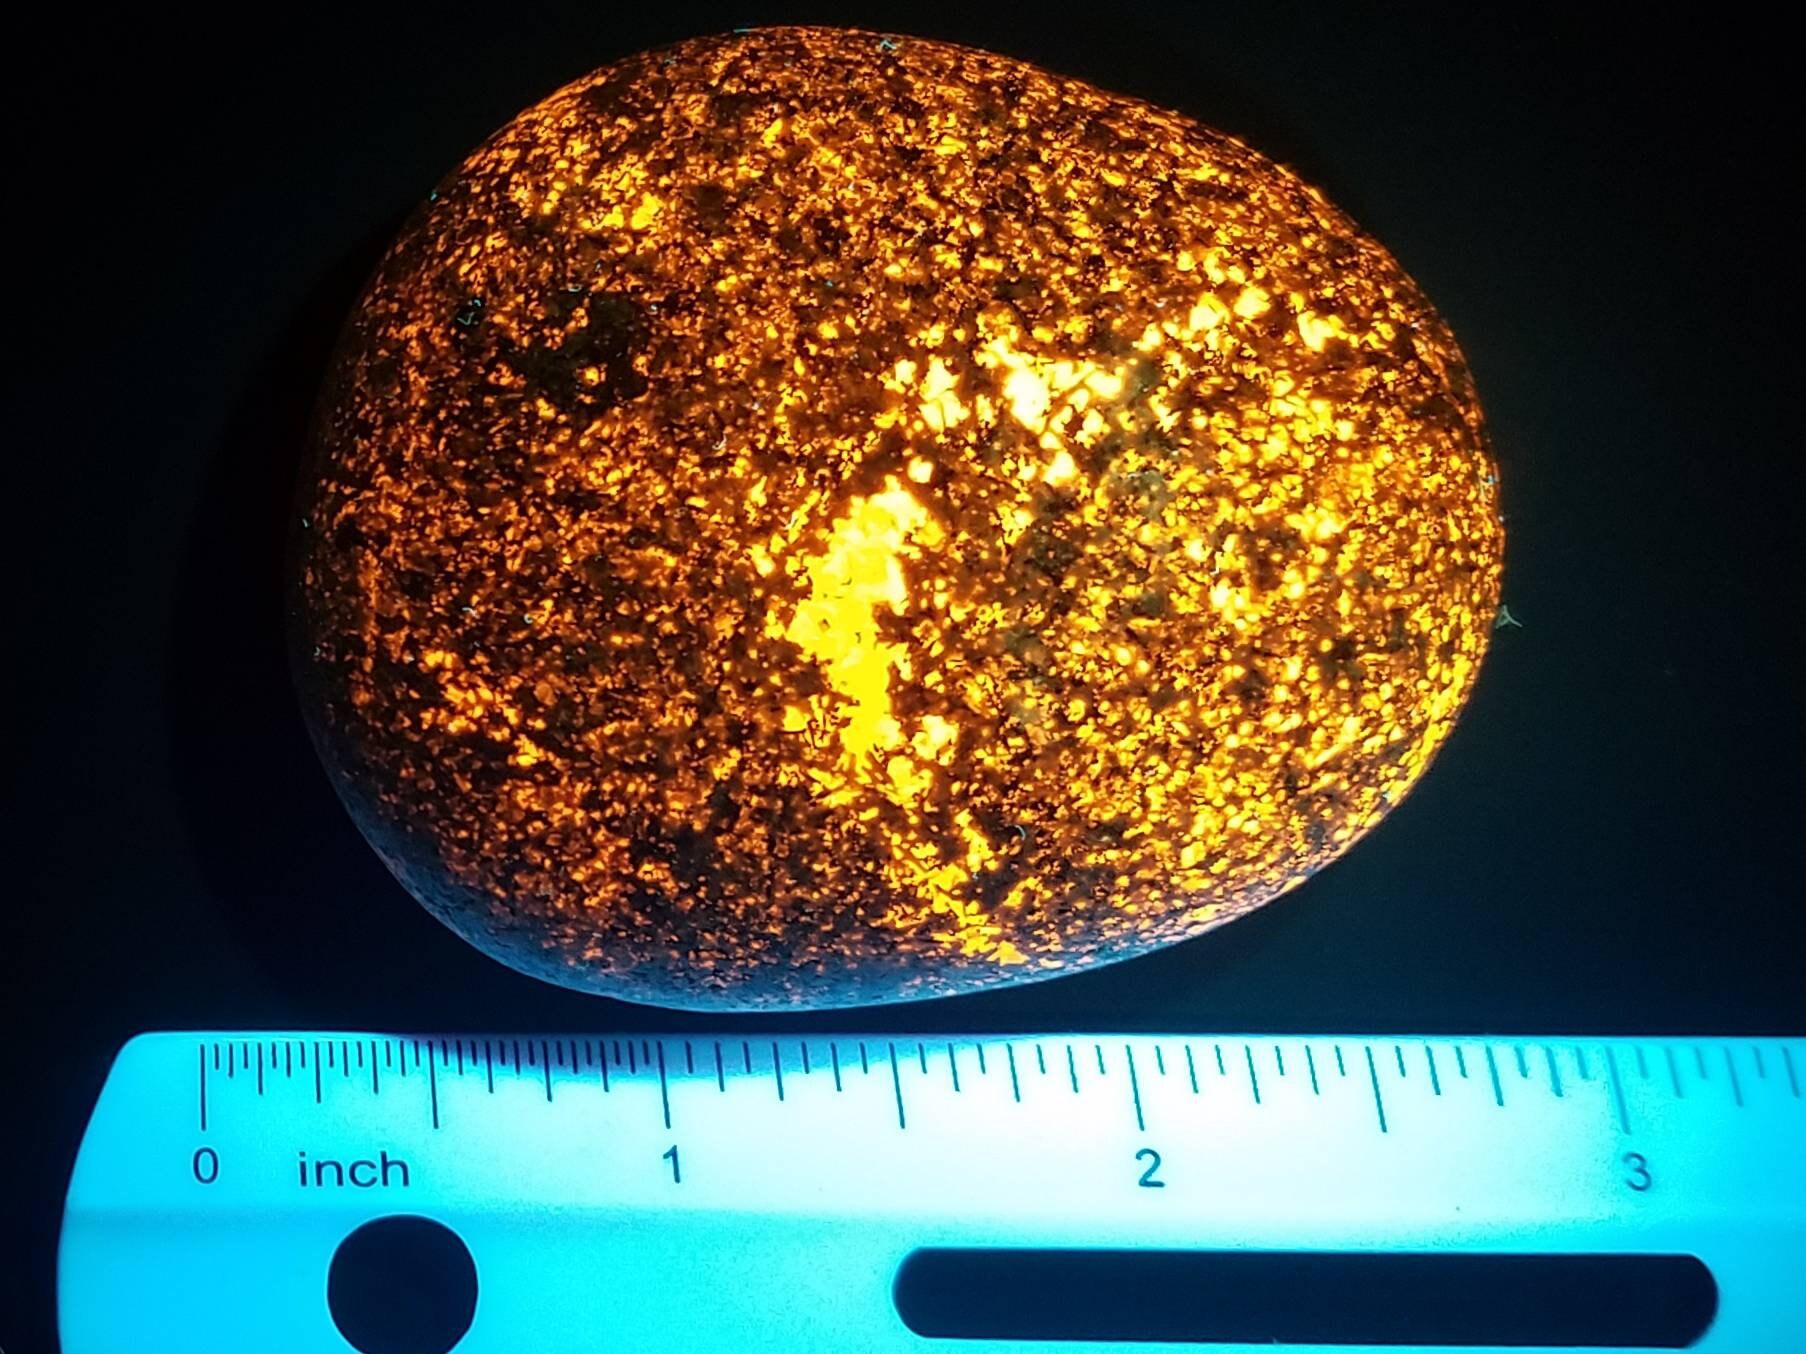 Lake Superior uv Reactive Sodalite Stone Yooper Rock Fluorescent Glow Yooper Emberlite 5.1 oz/ 144.58 g ABSOLUTELY GORGEOUS YOOPERITE